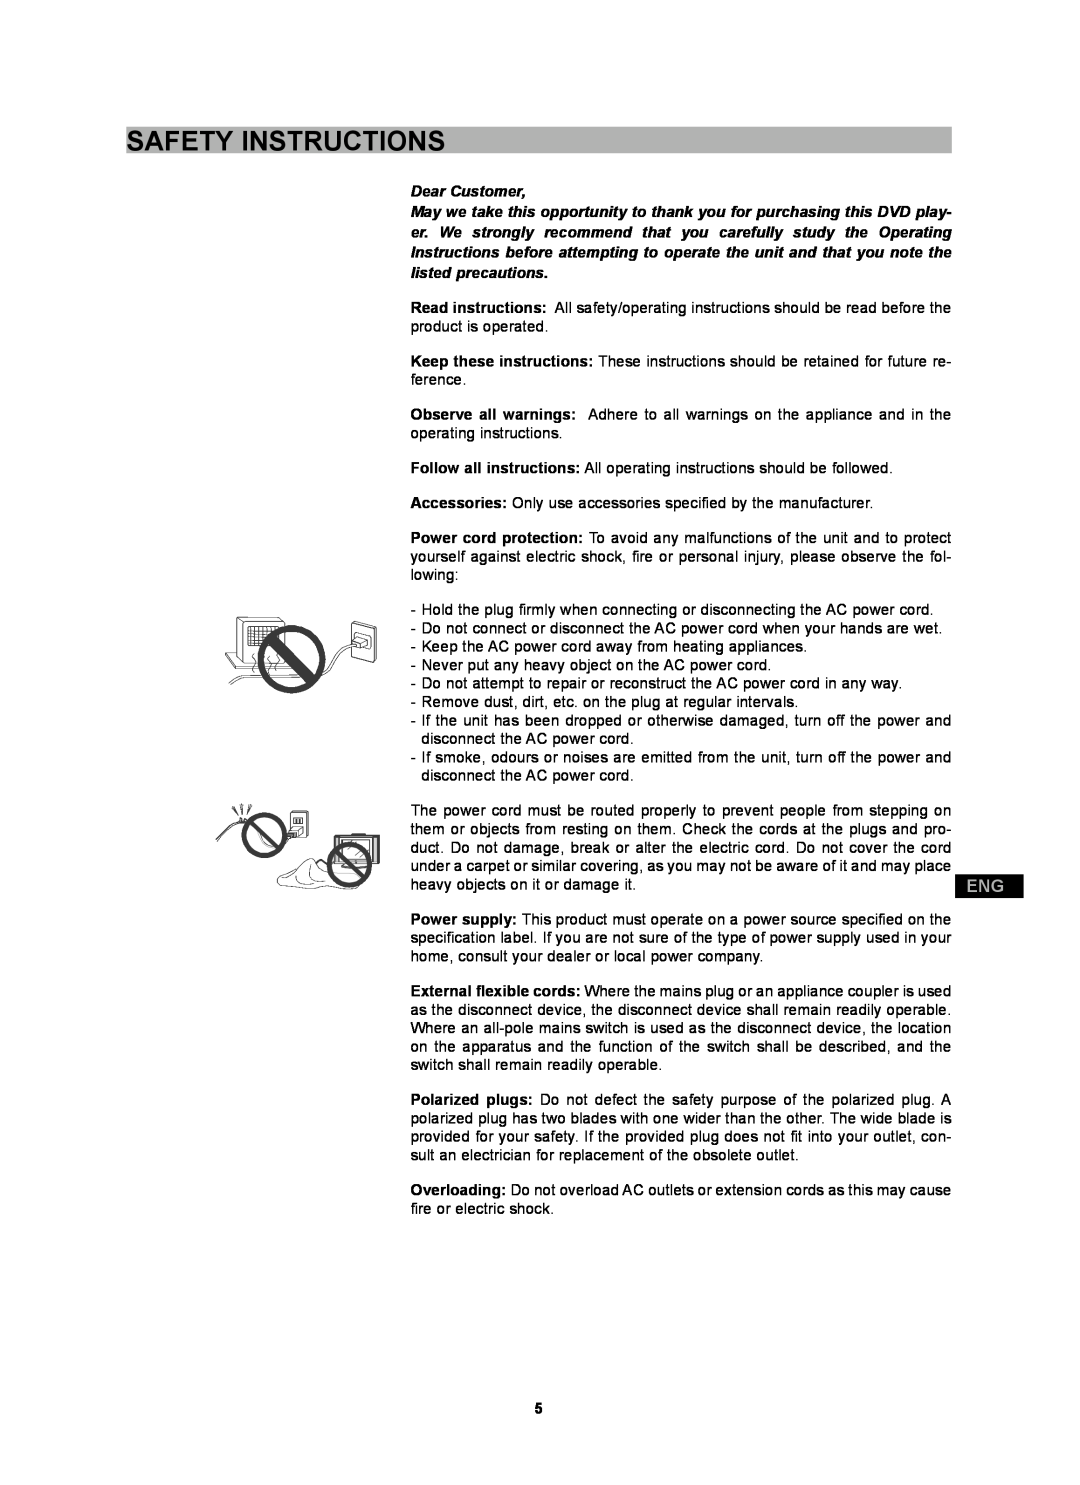 CyberHome Entertainment CH-DVD 452 manual Safety Instructions, Dear Customer 